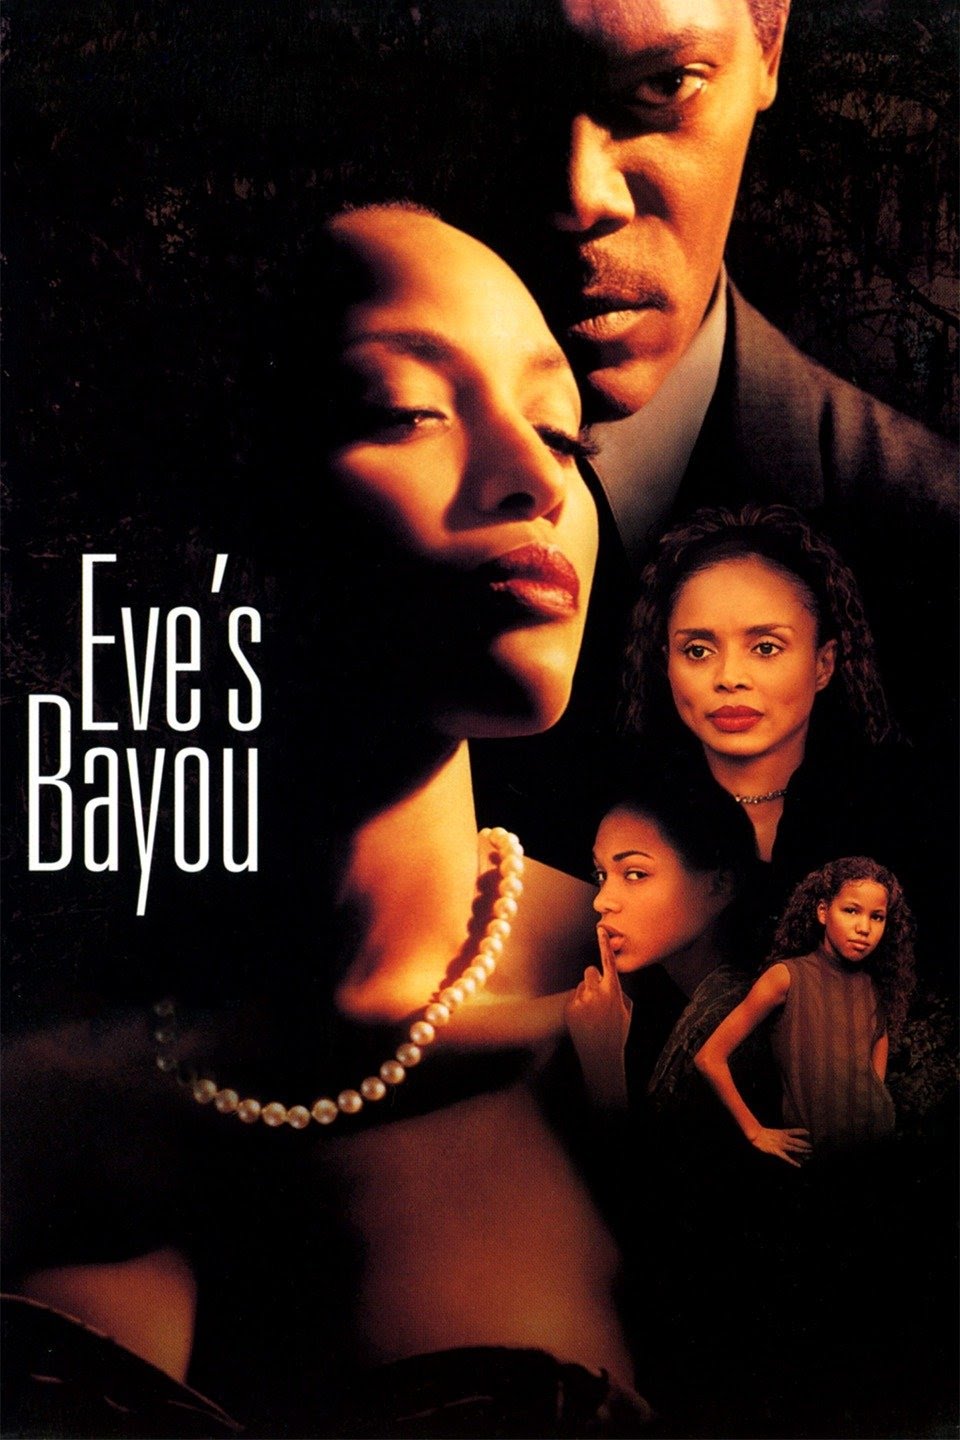 Eve's Bayou movie poster